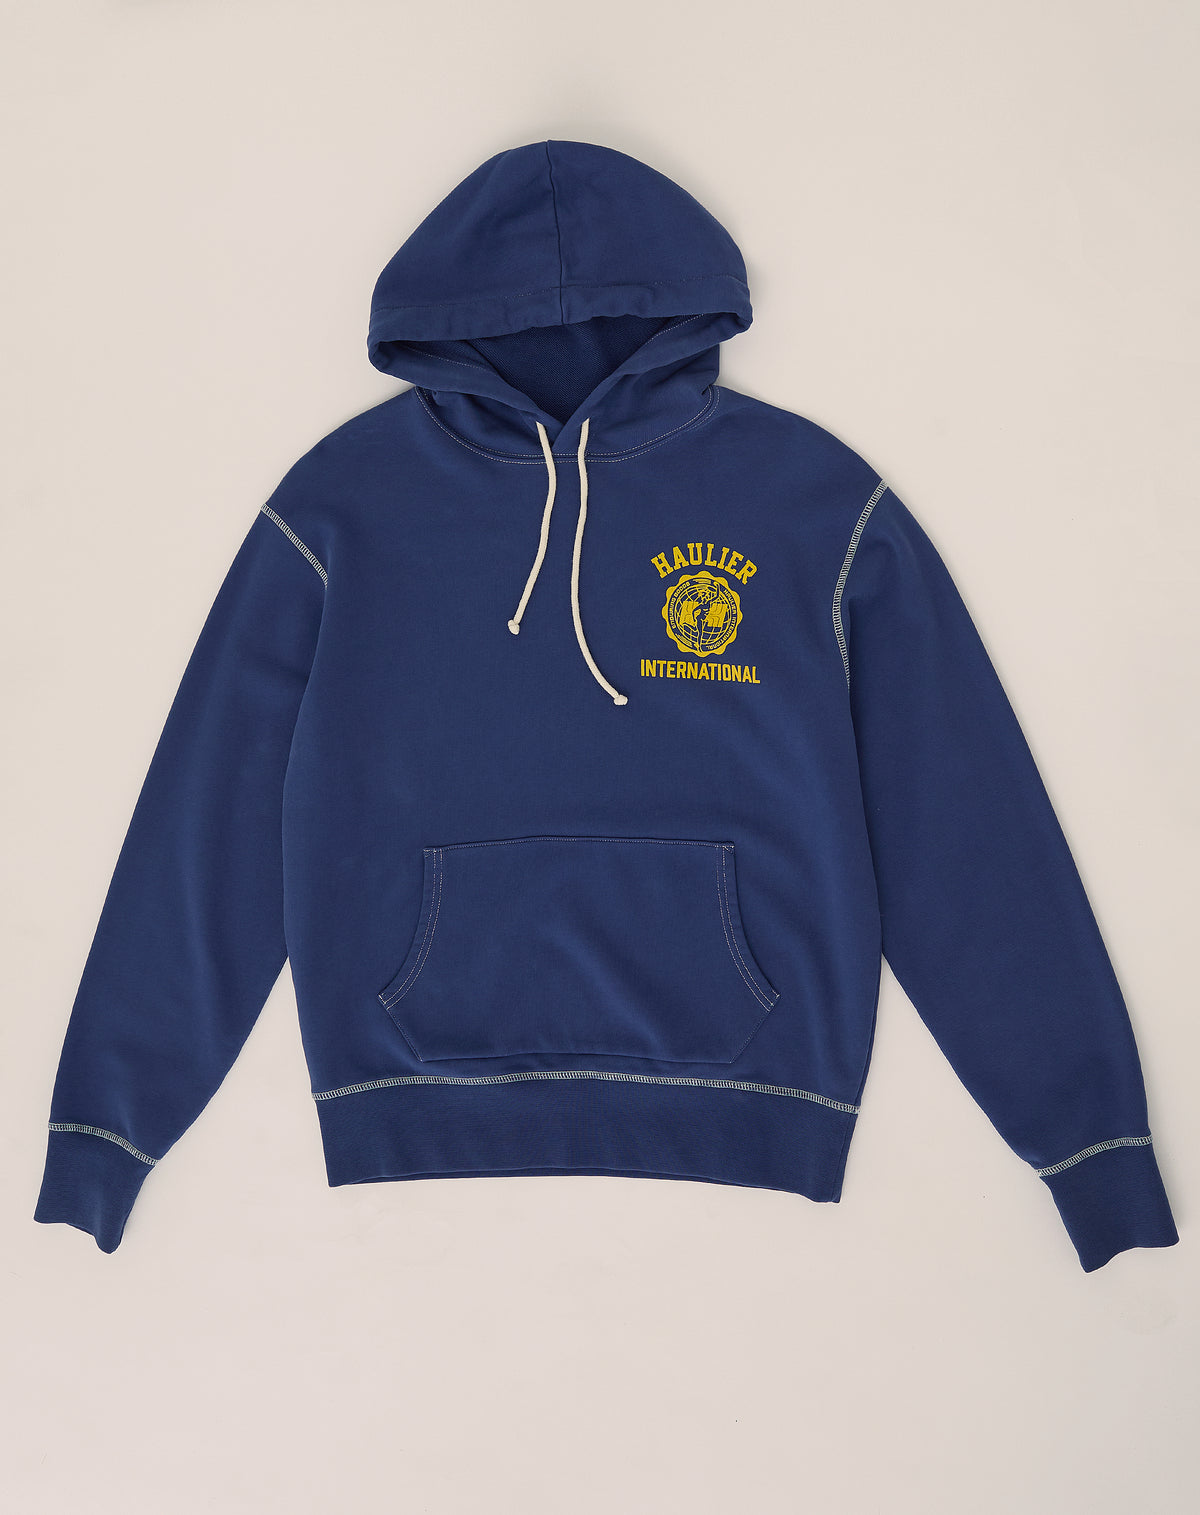 Brockton Hooded Sweatshirt - Washed Navy Fleece